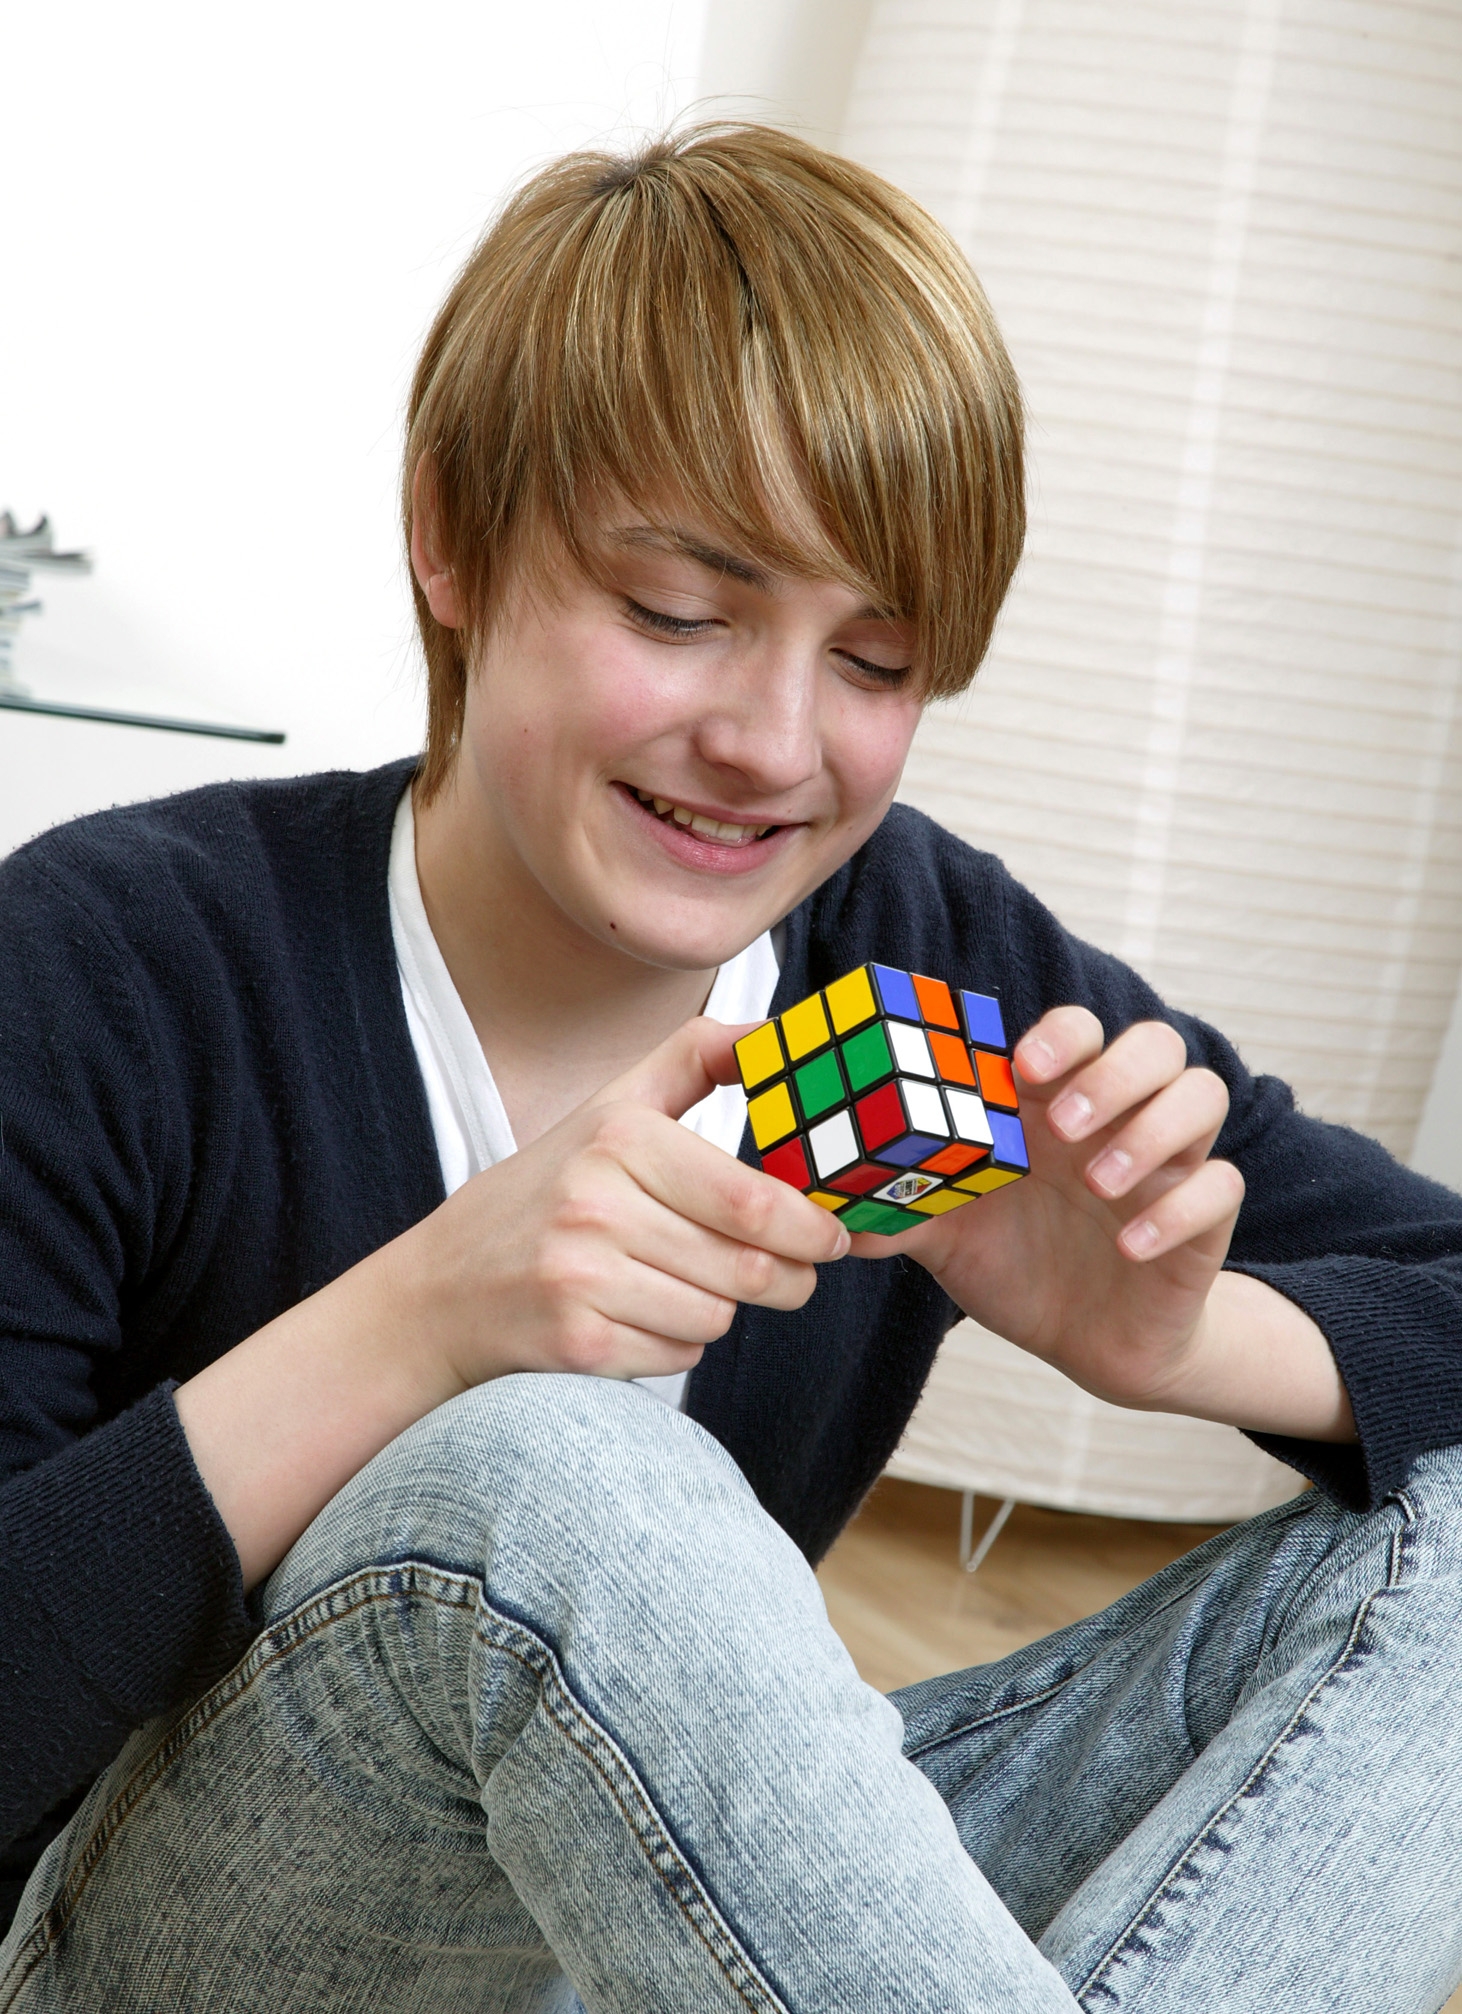 Playing with magic. Мальчик с кубиком Рубика. Ребенок с кубиком Рубика. Кубик Рубика в руках. Мальчик собирает кубик Рубика.